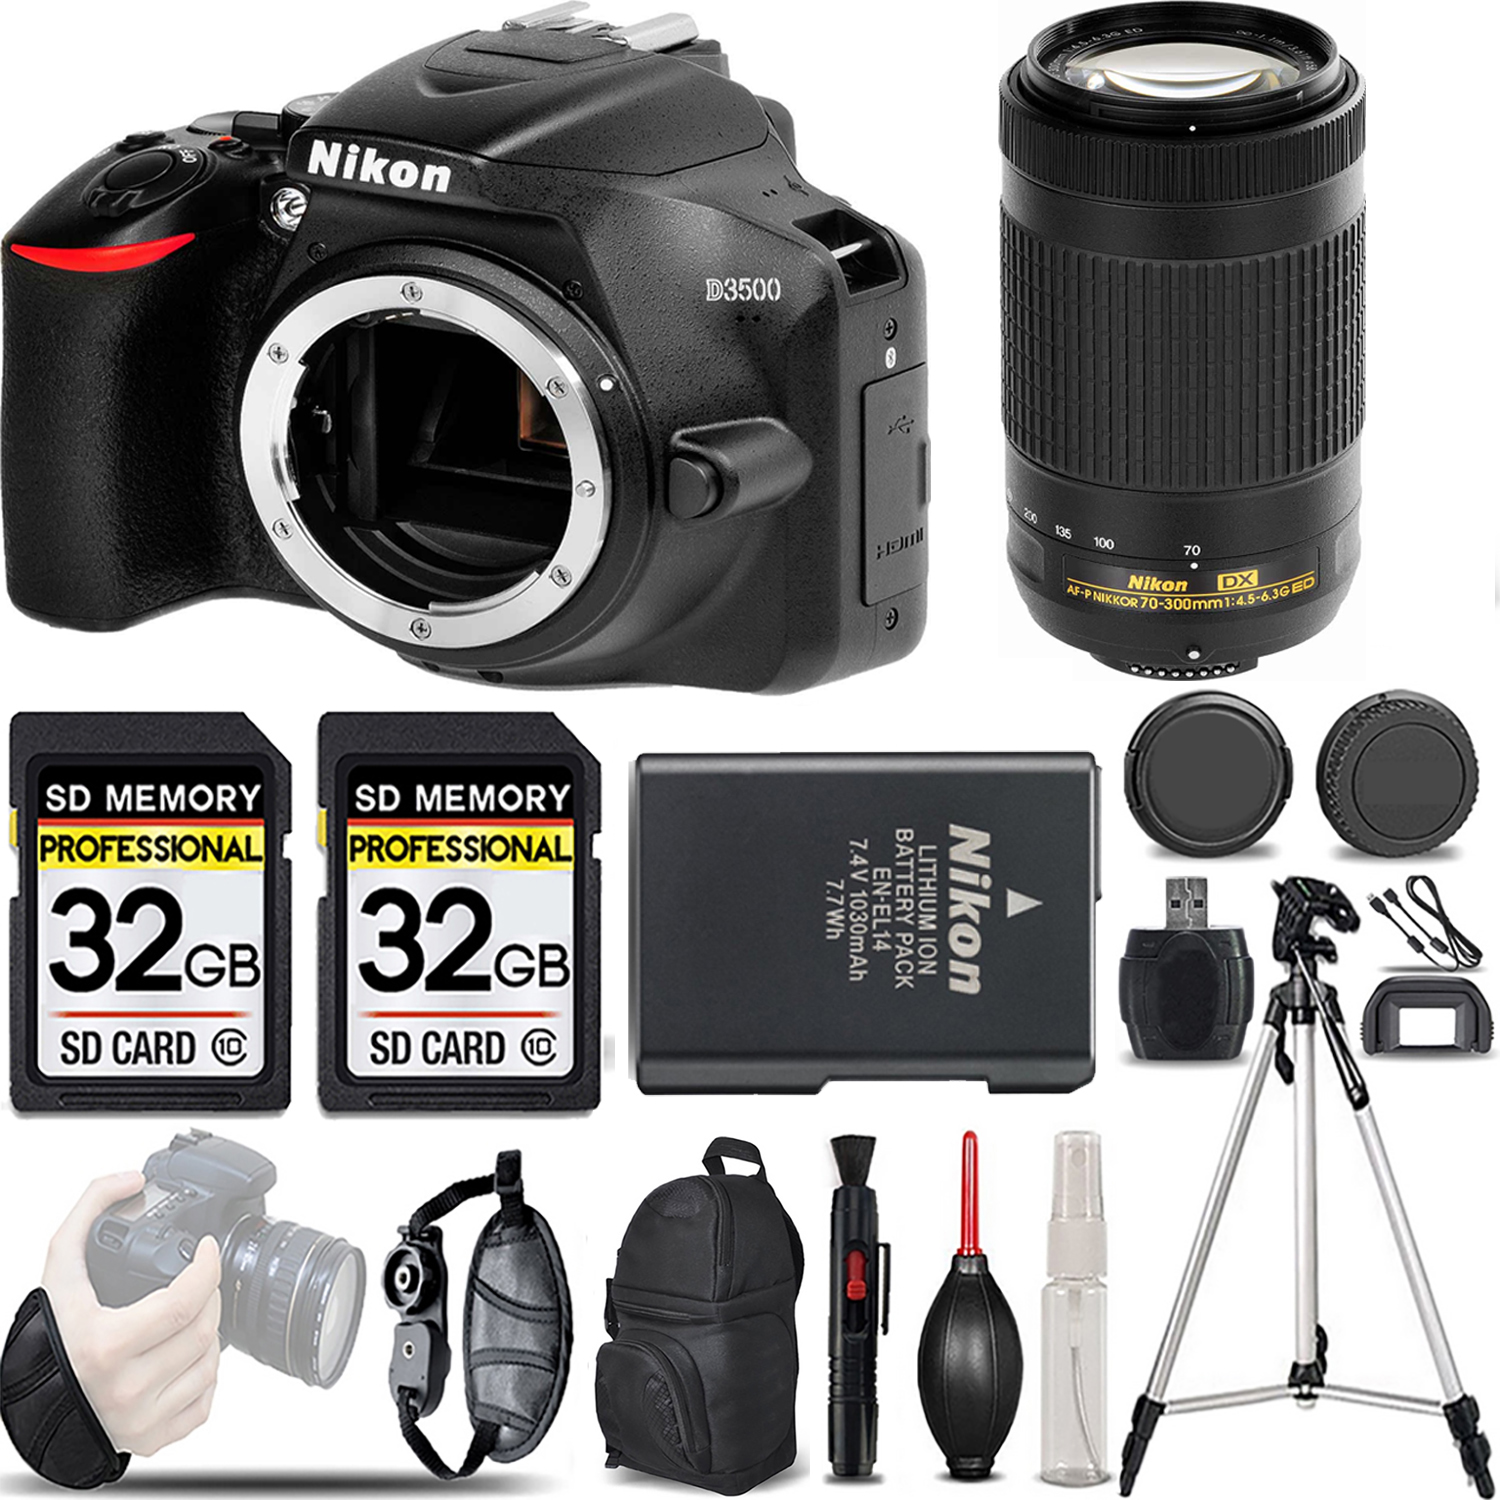 D3500 DSLR Camera (Body Only) + 70- 300mm Lens - LOADED KIT *FREE SHIPPING*